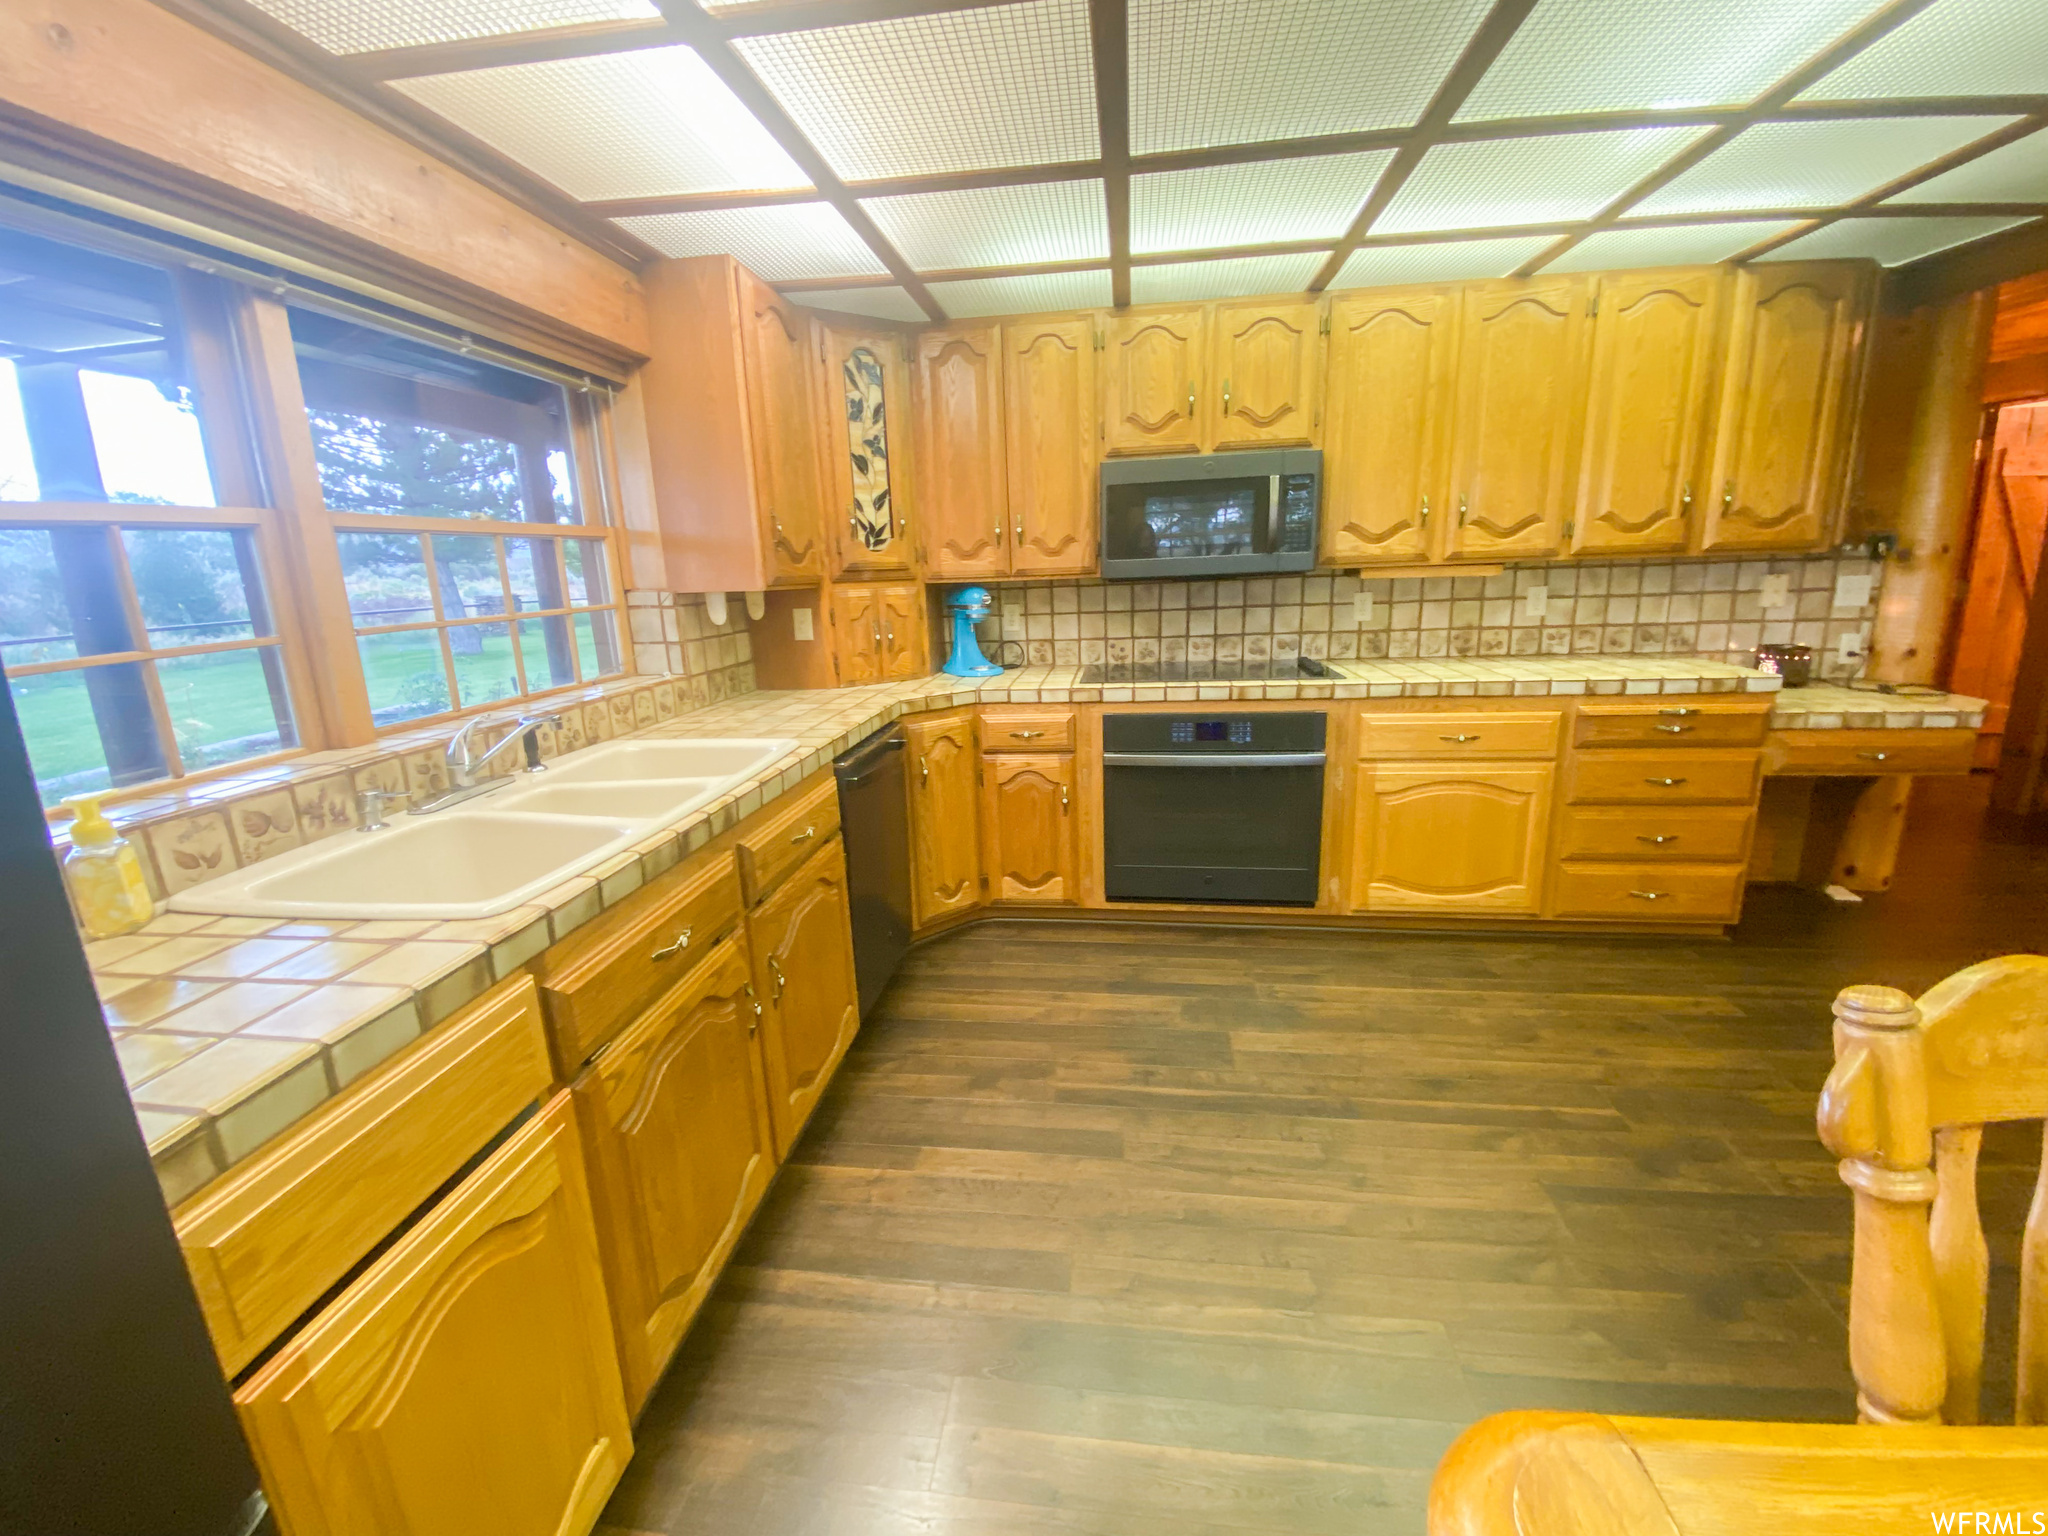 Kitchen with black appliances, tile countertops, dark wood-type flooring, and backsplash